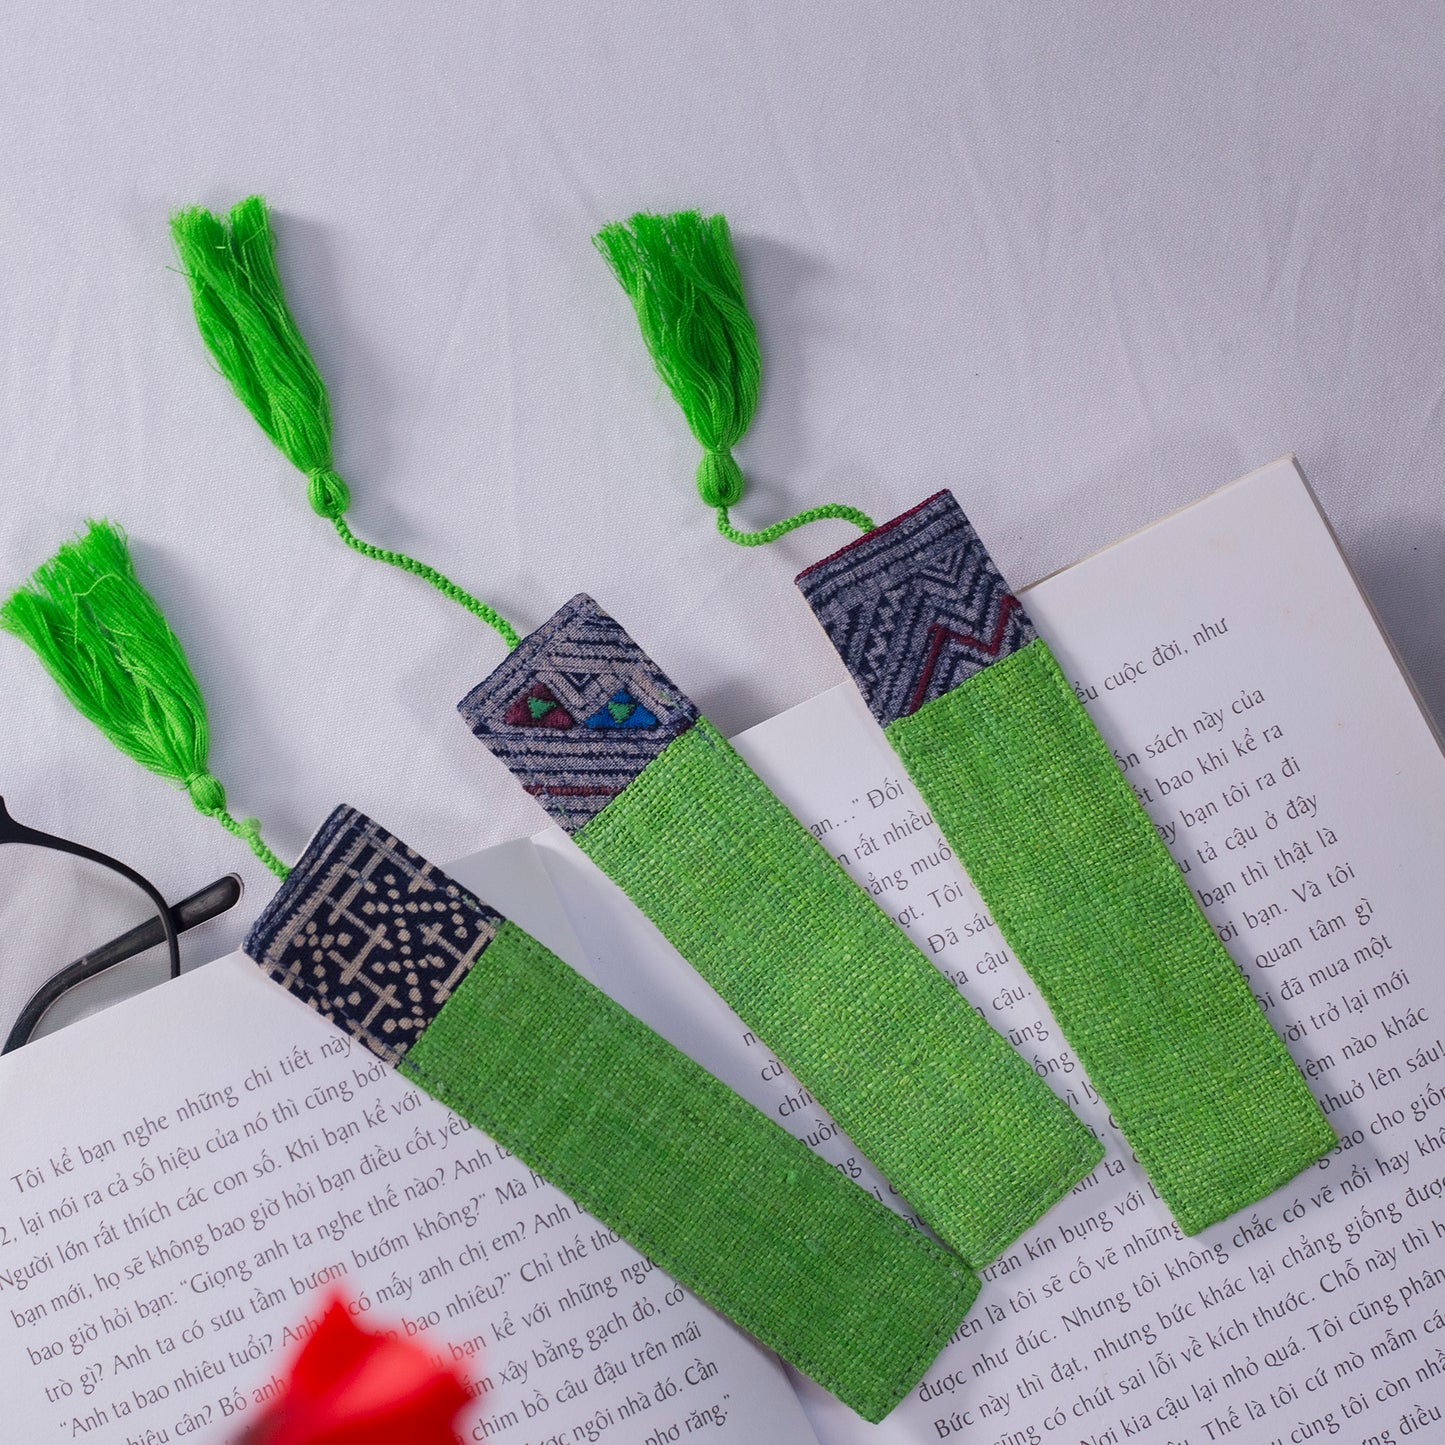 Hemp bright green bookmark with vintage batik patch